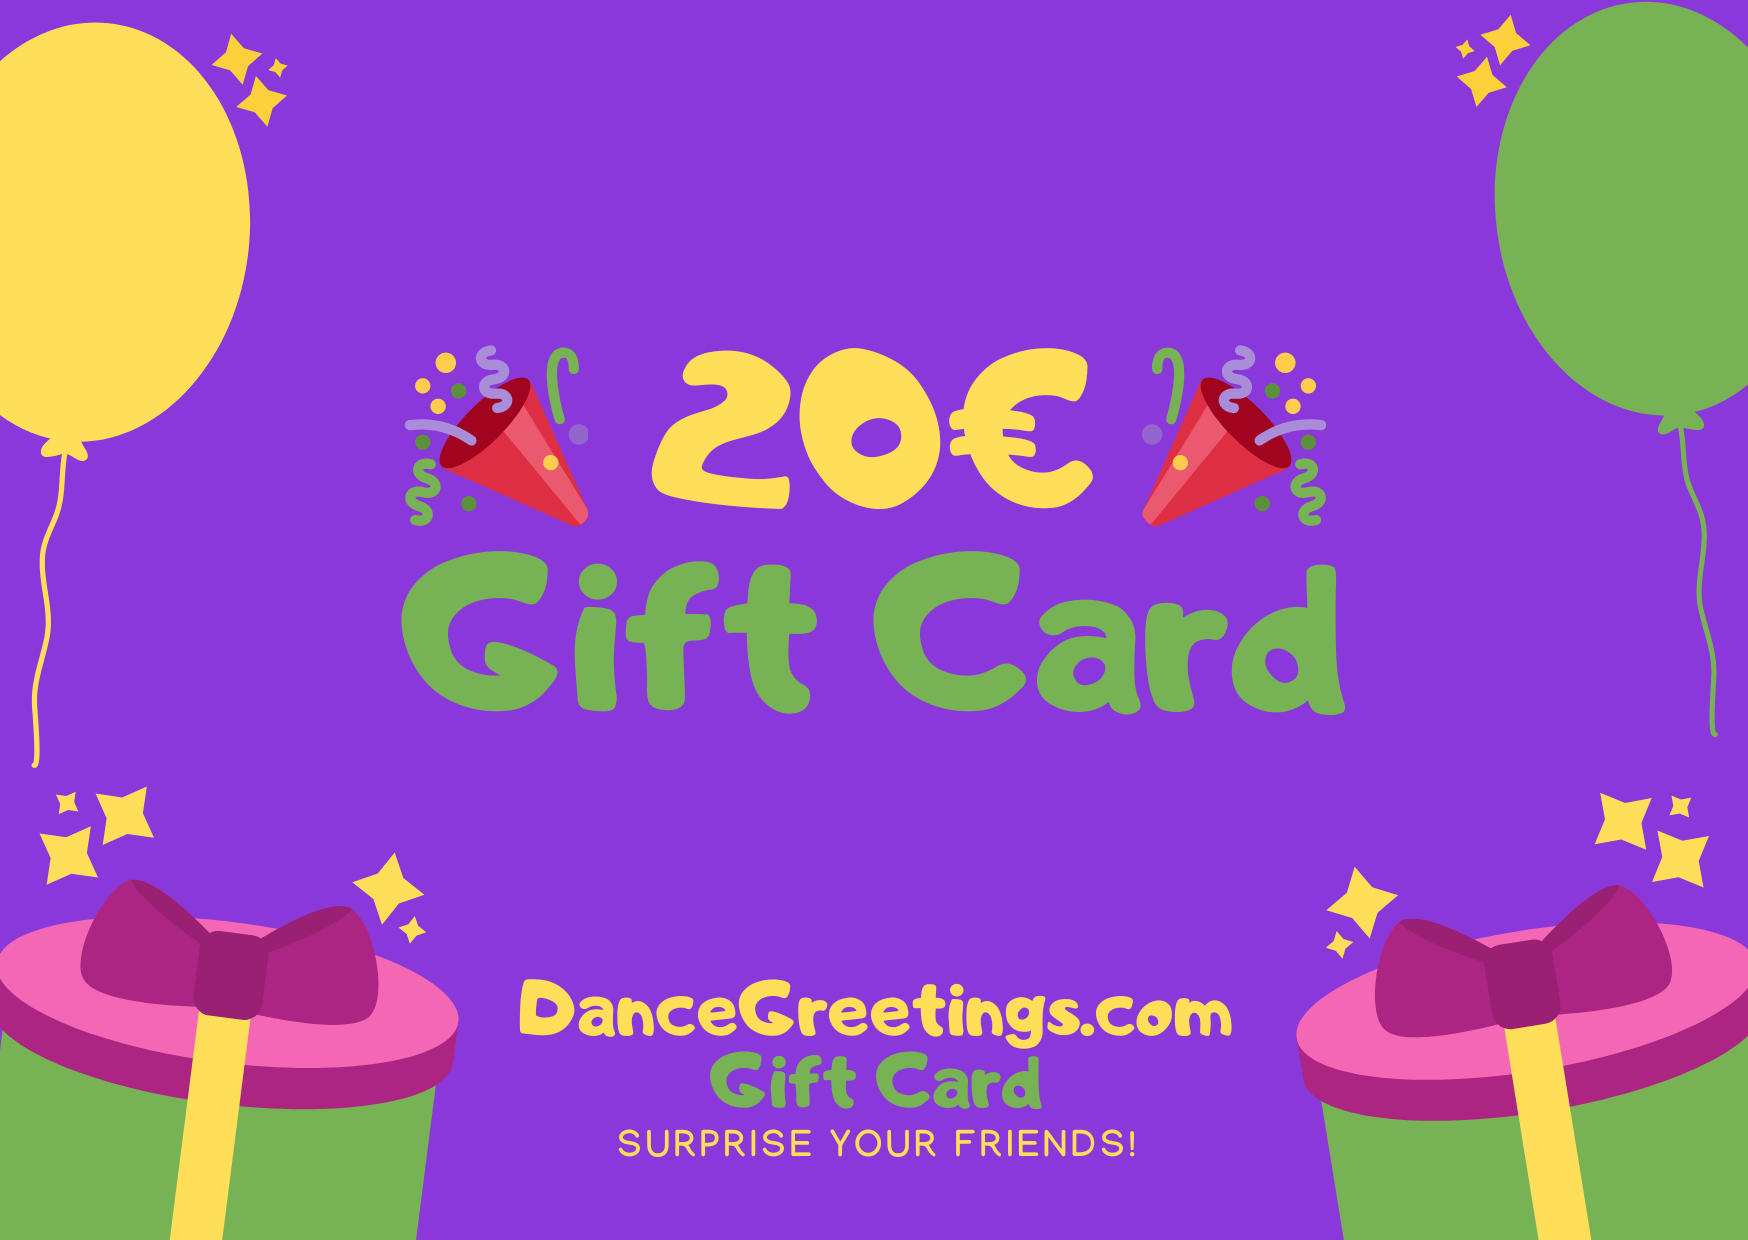 DanceGreetings Gift Card